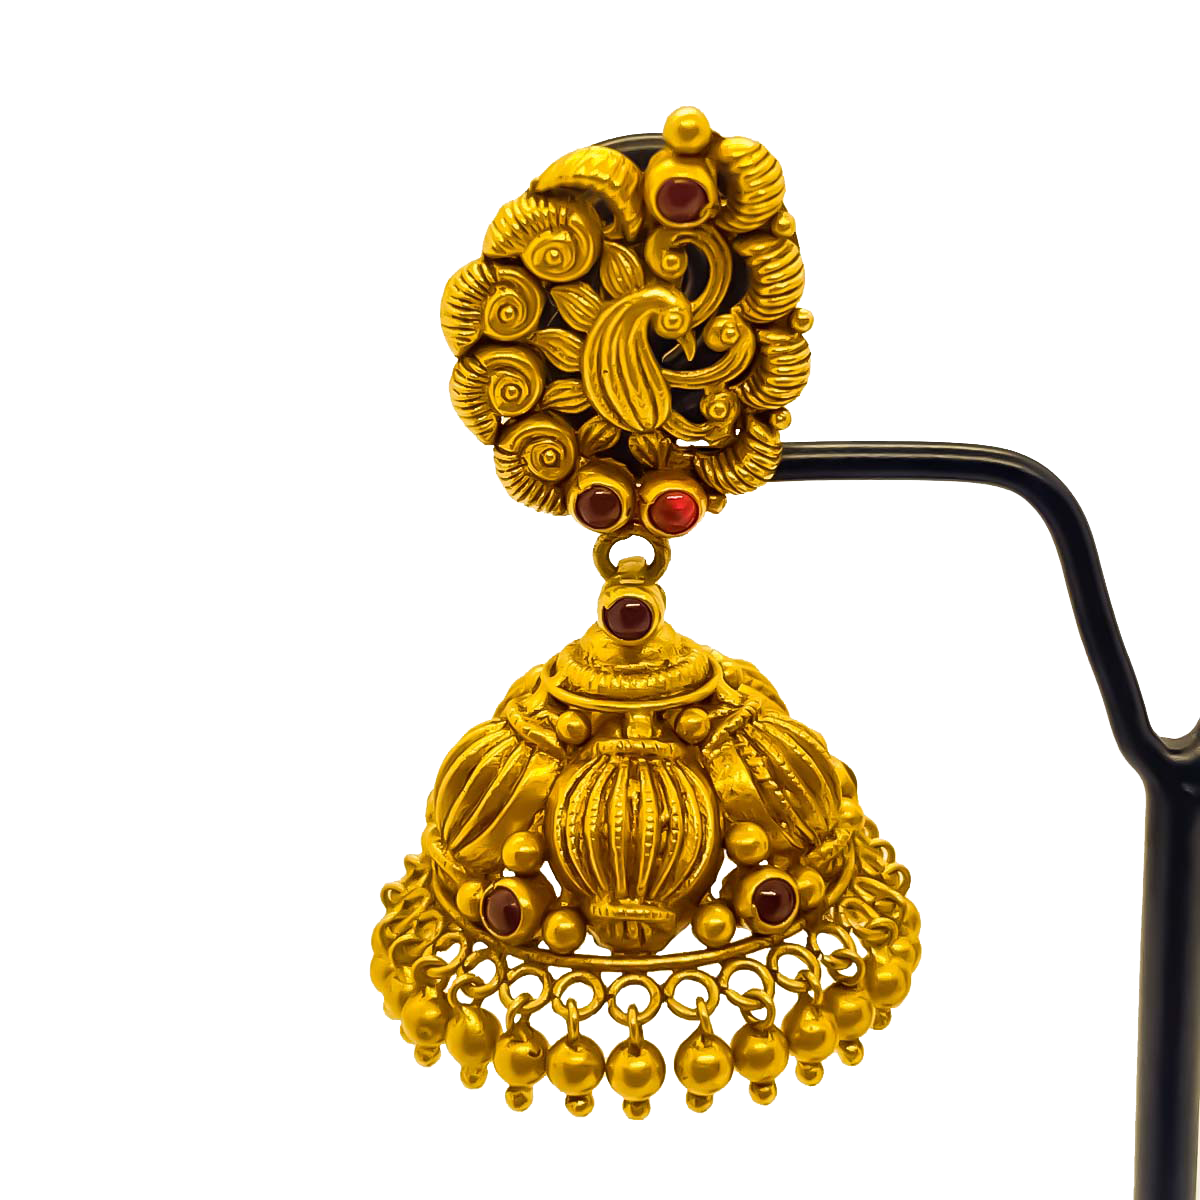 The Antique Floret Gold Earrings